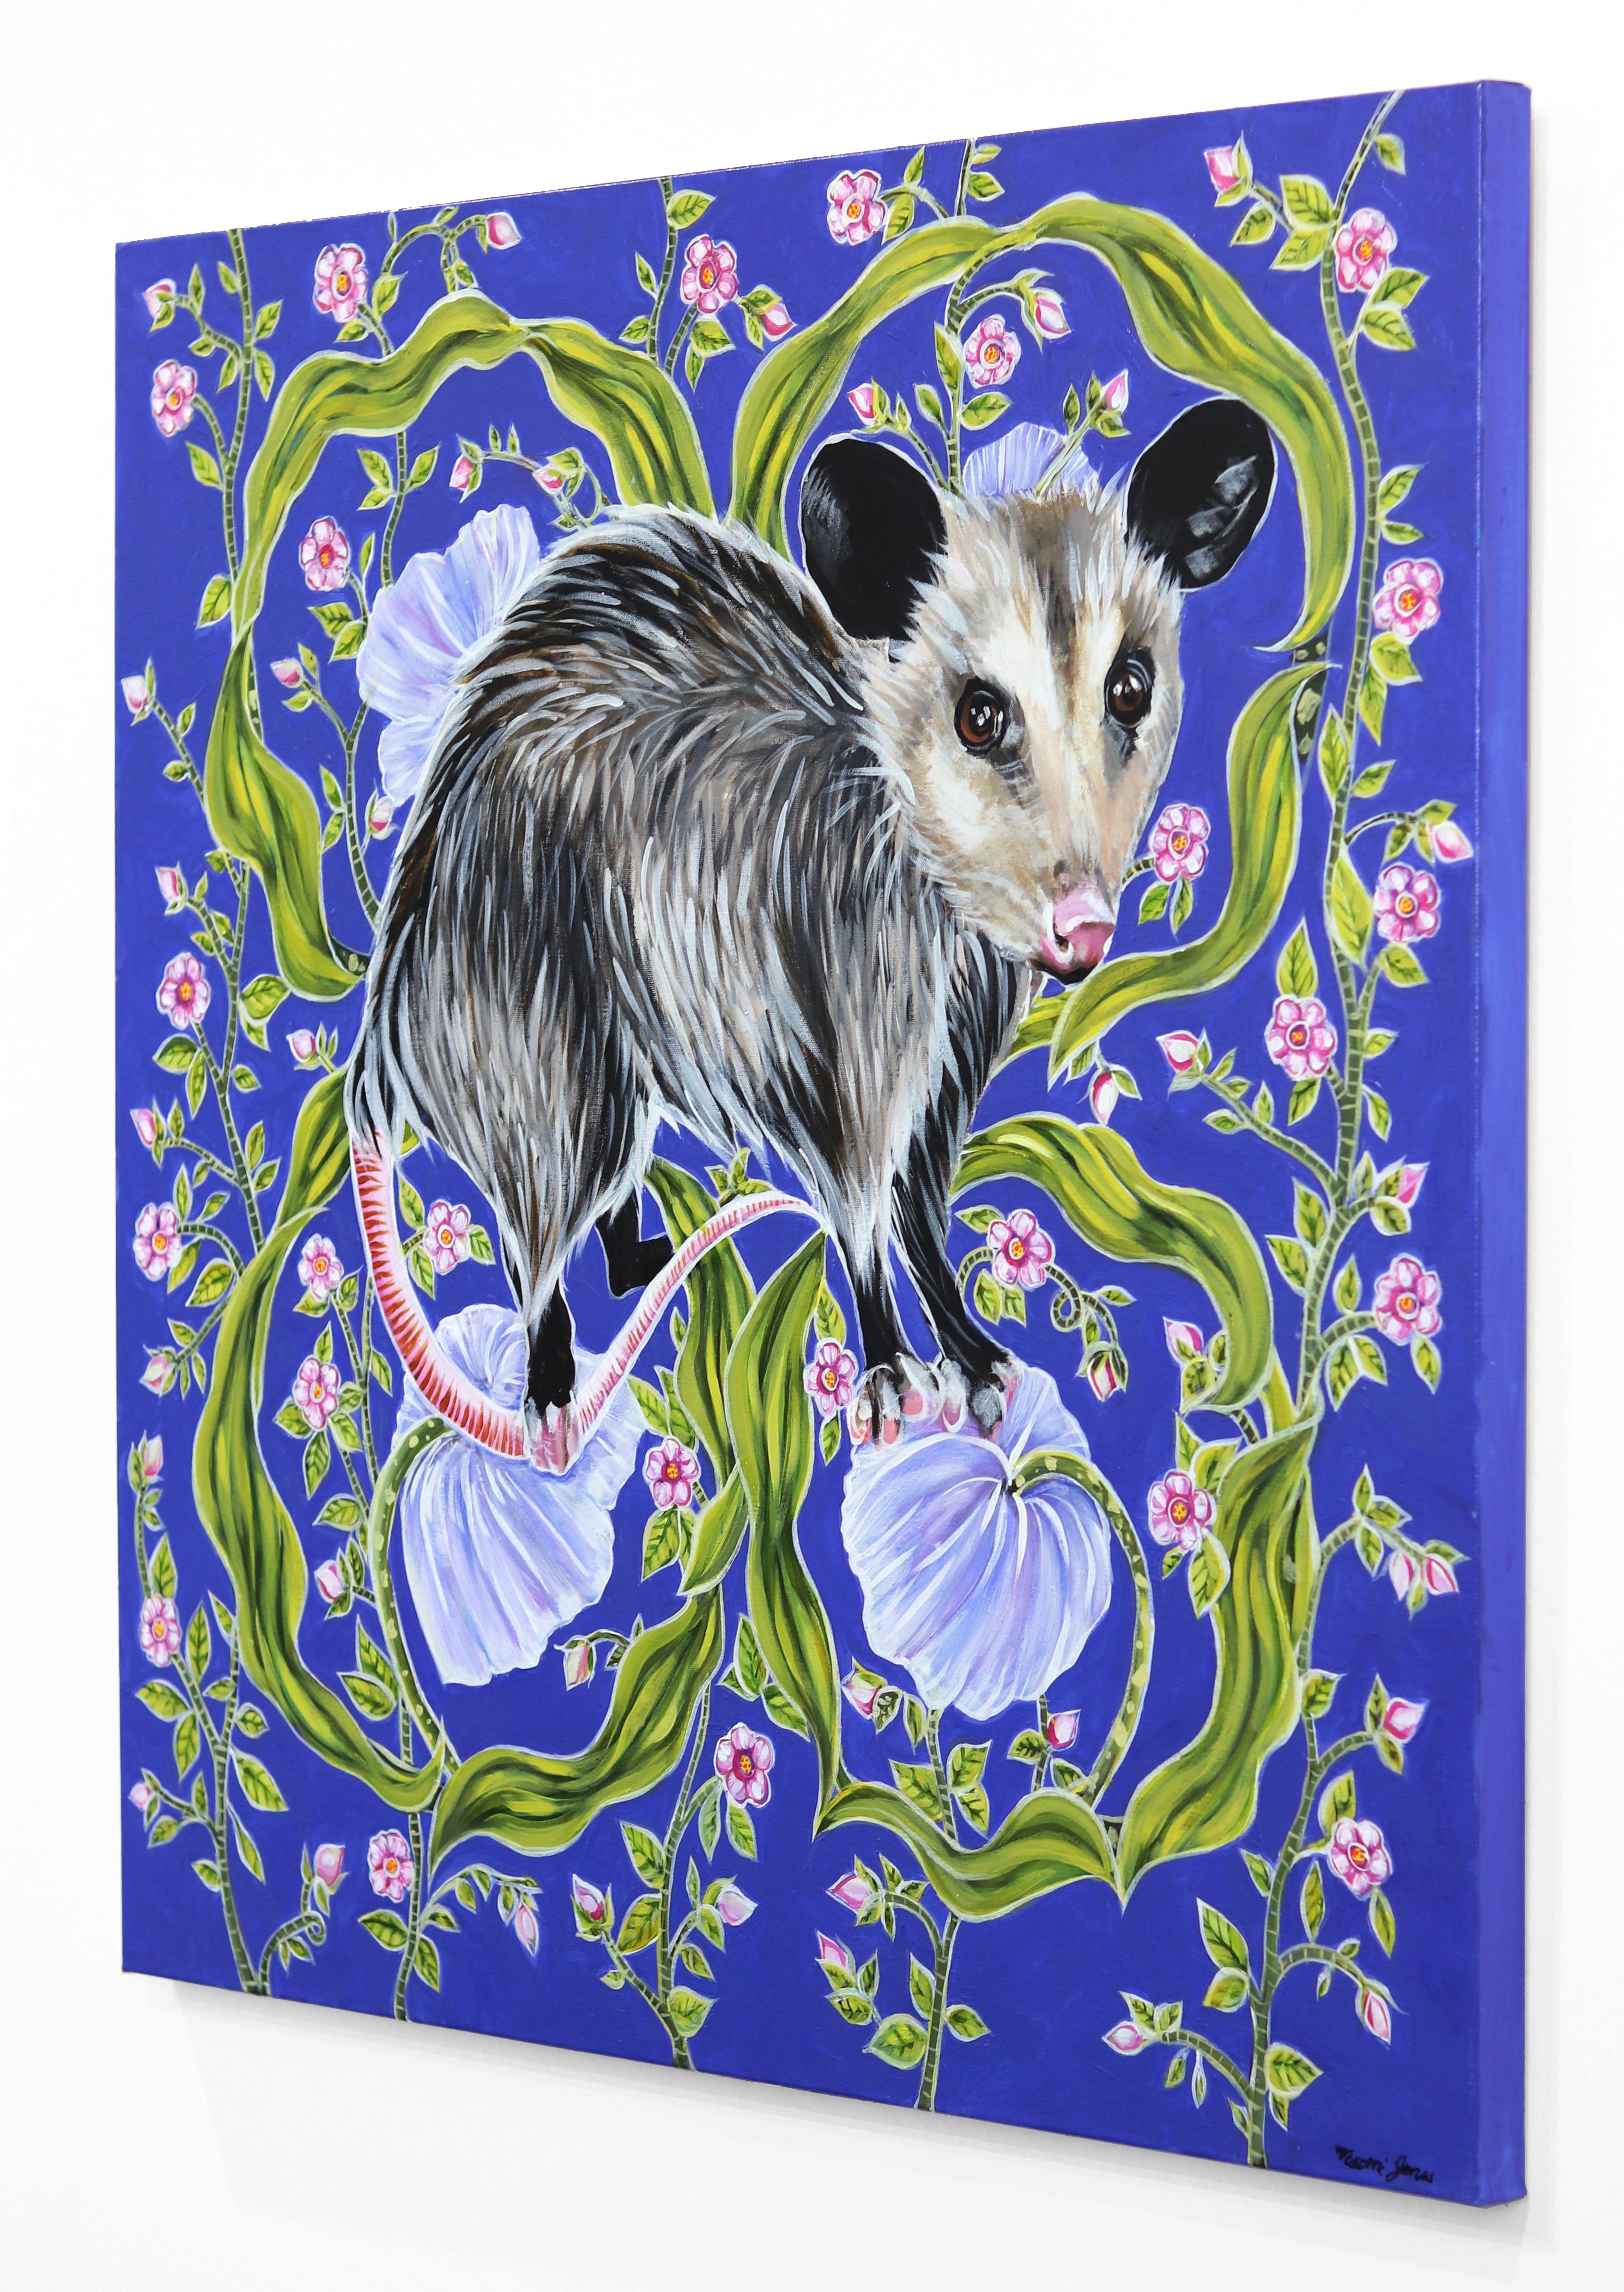 Possum on Blue - Original Vivid Figurative Animal Painting on Canvas For Sale 1